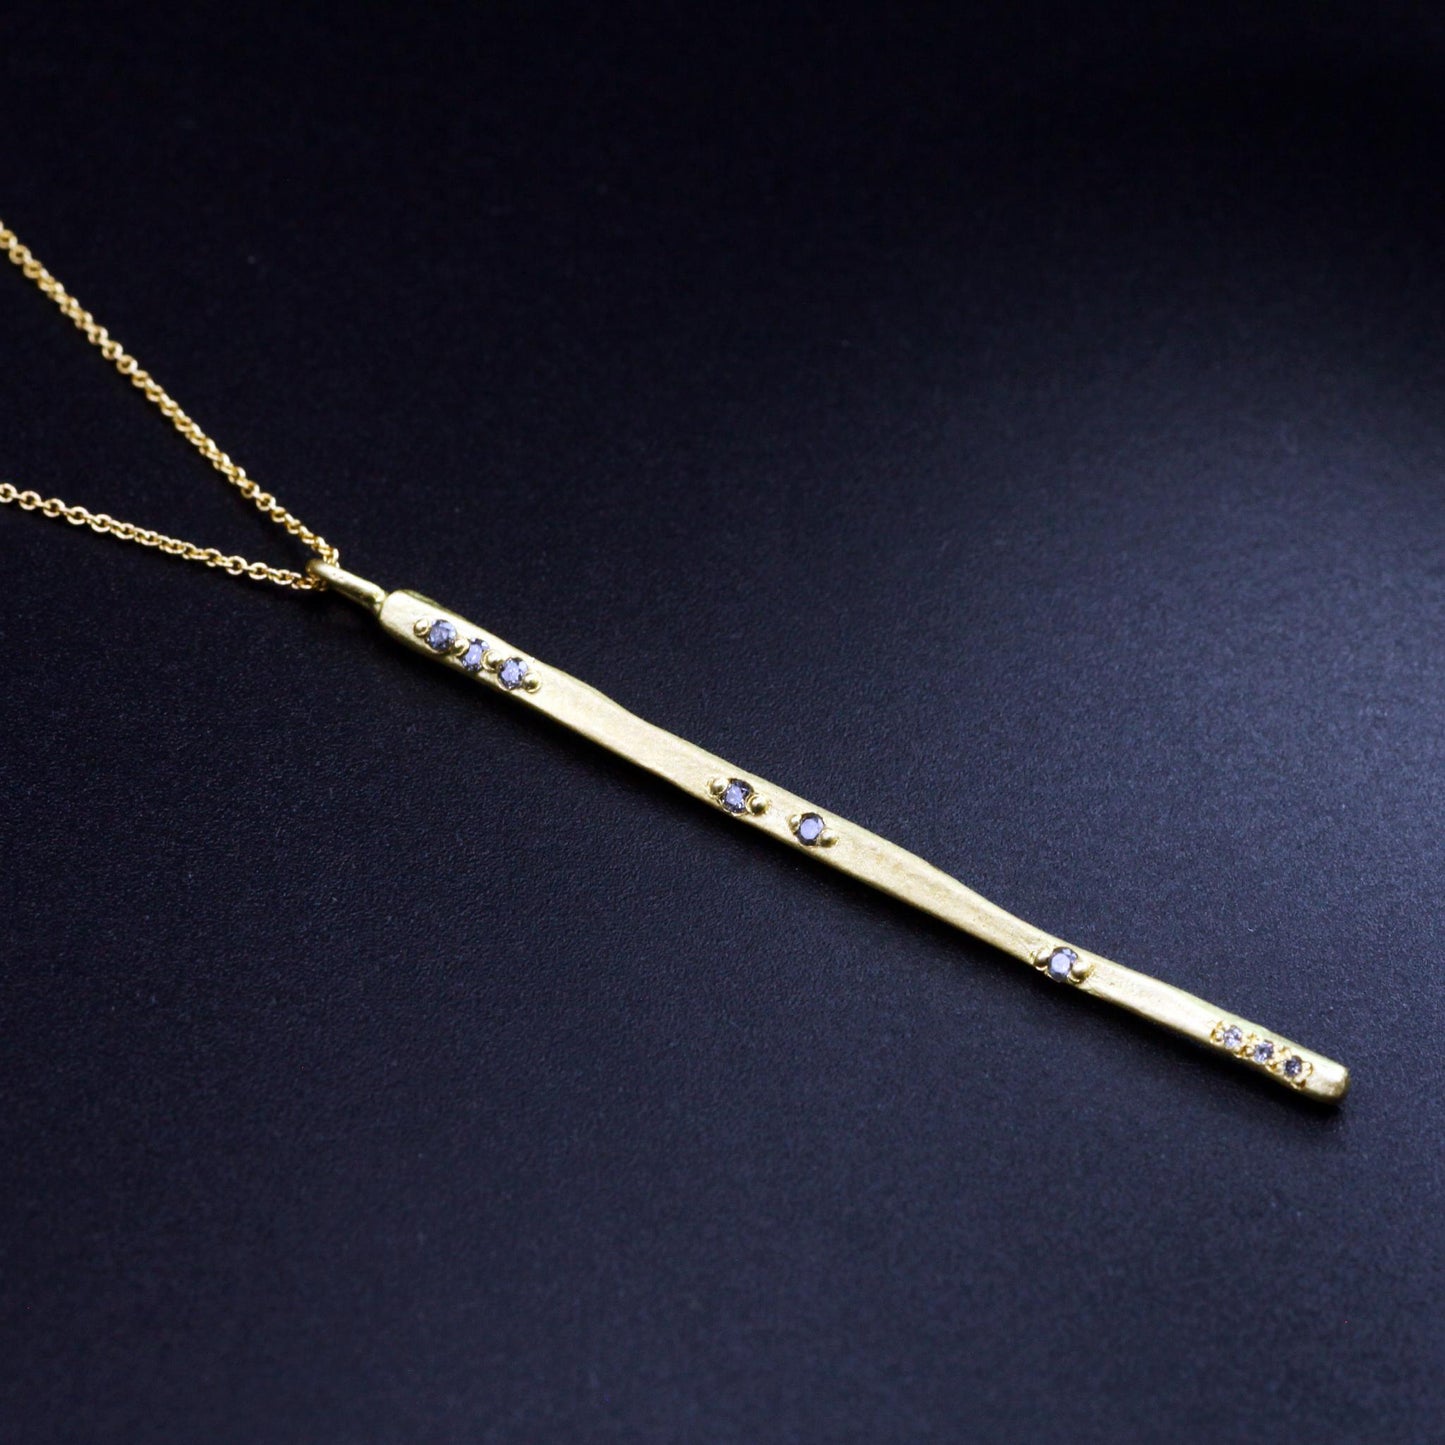 Aili Jewelry | "Sophie" Grey Diamond + 14K Gold Pendent Necklace | Firecracker